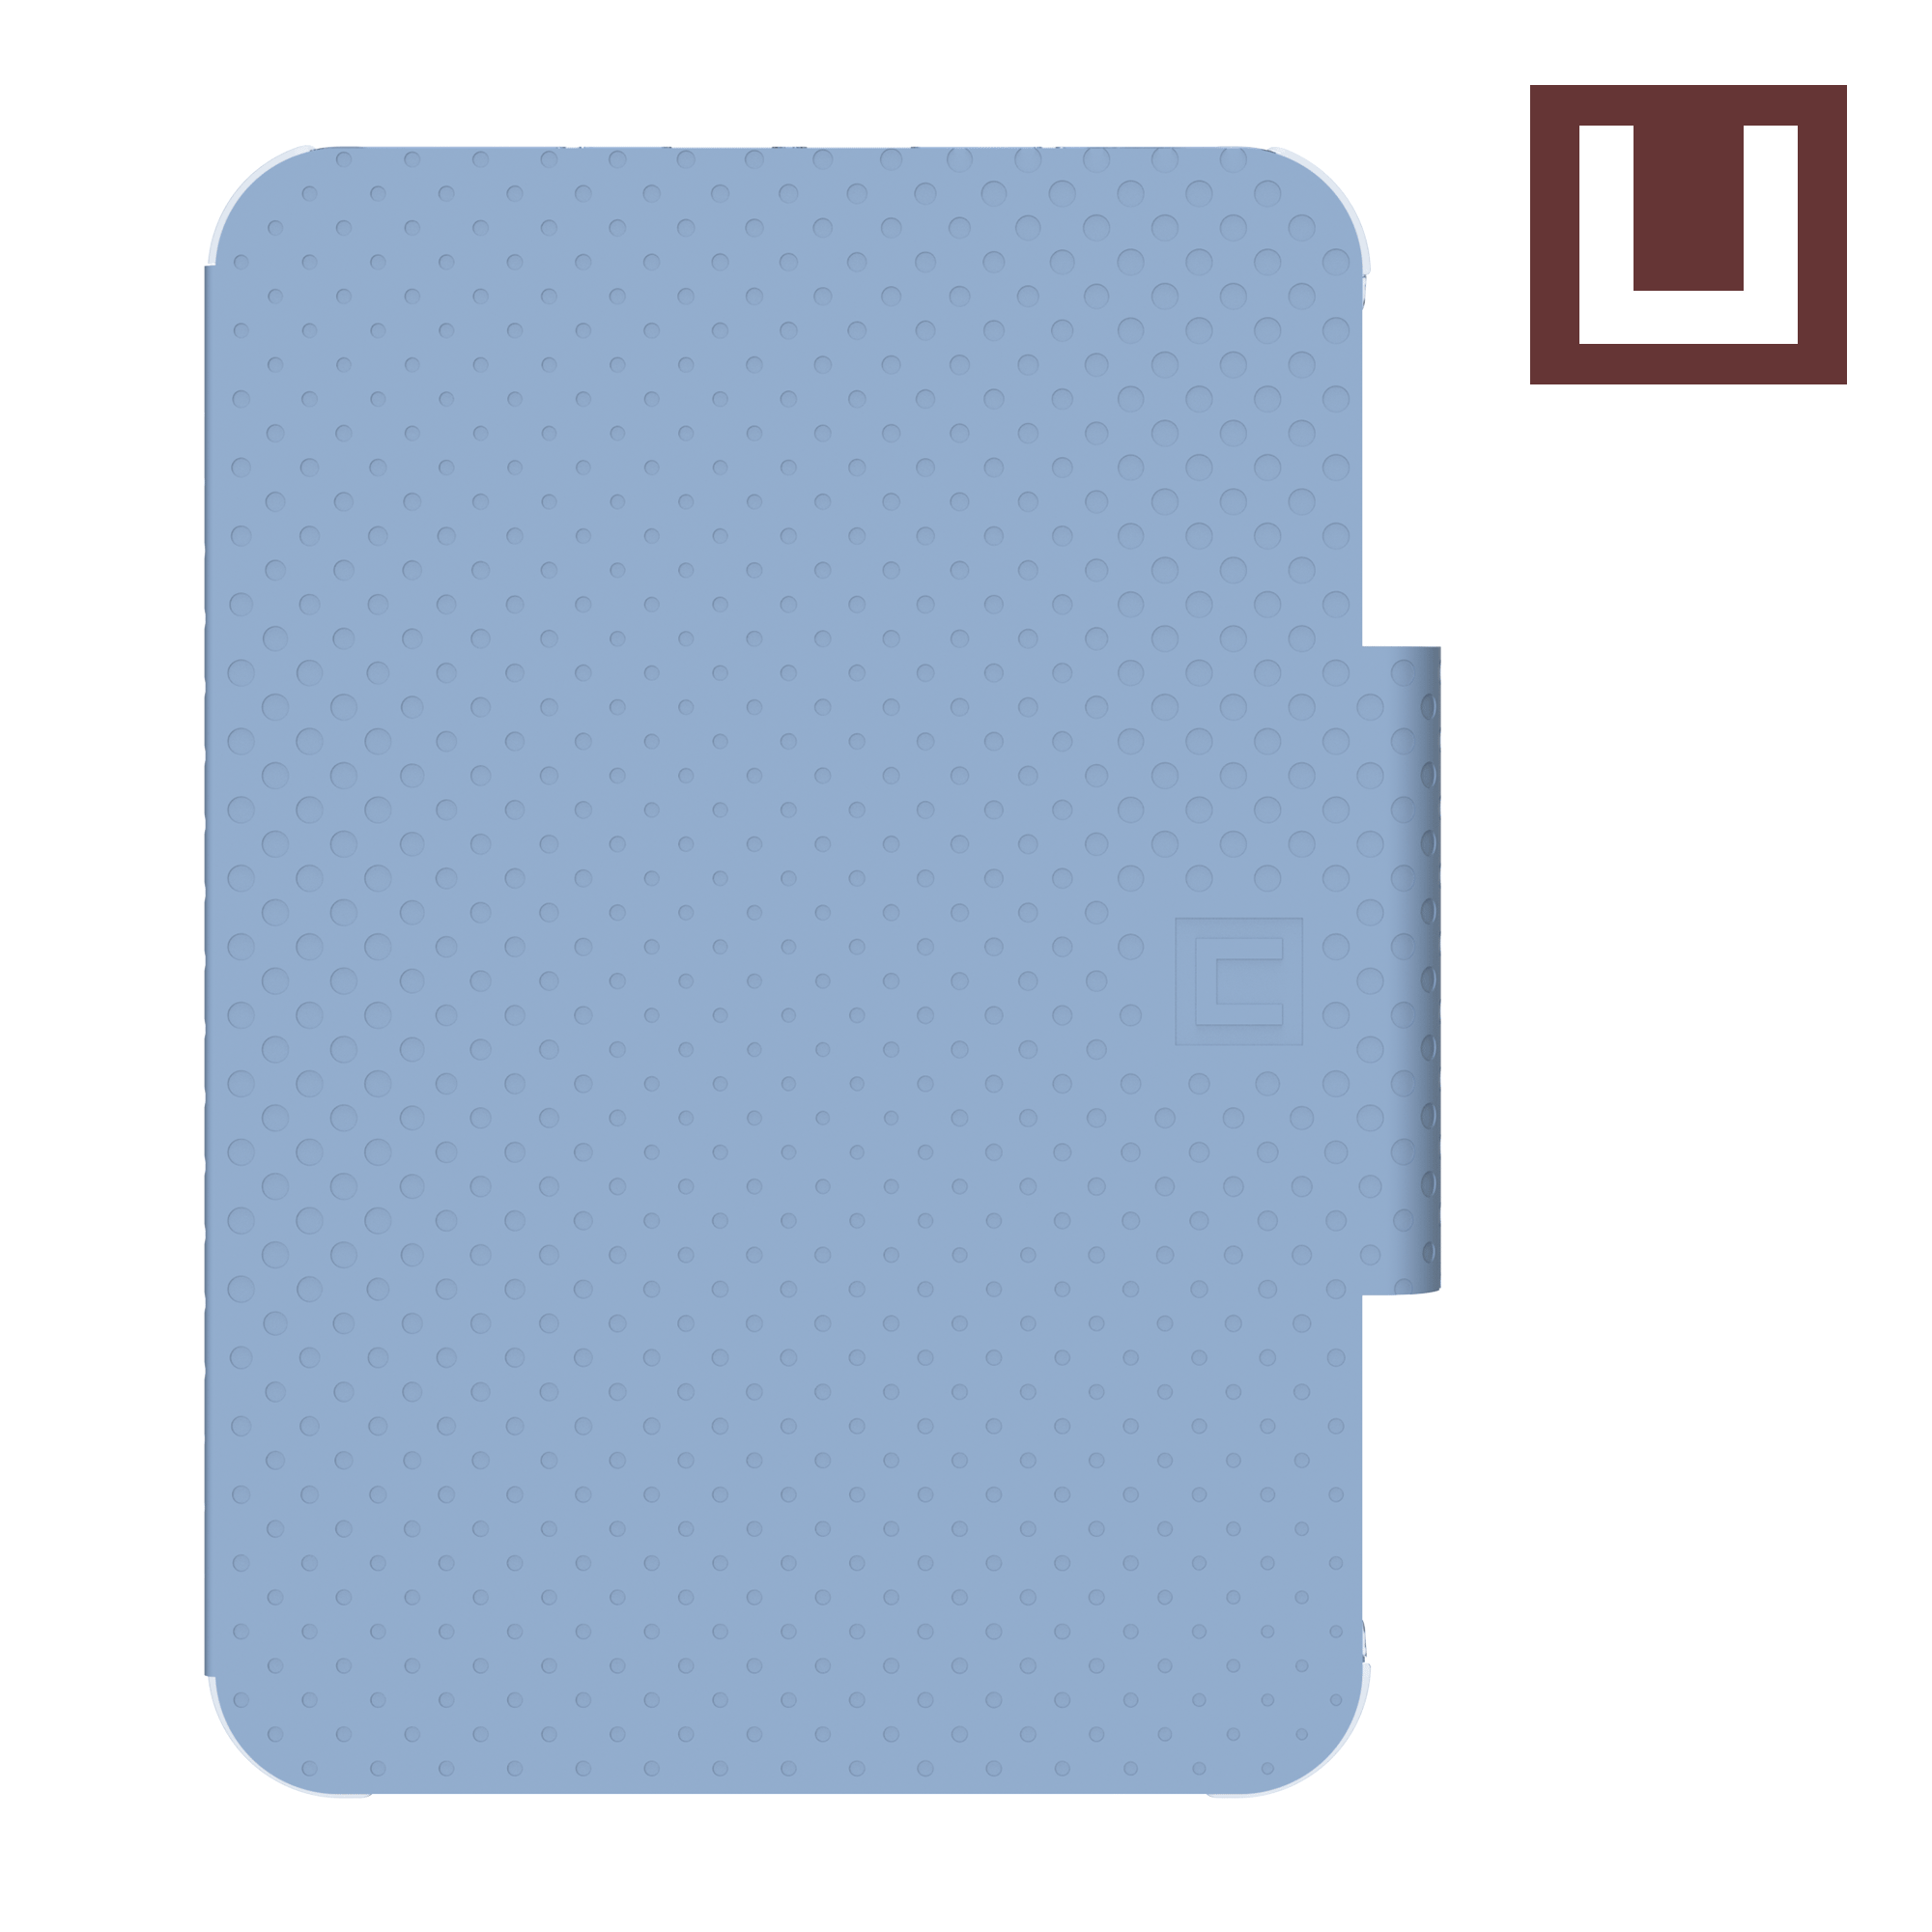  [U] Ốp Lucent cho iPad Mini 8.3